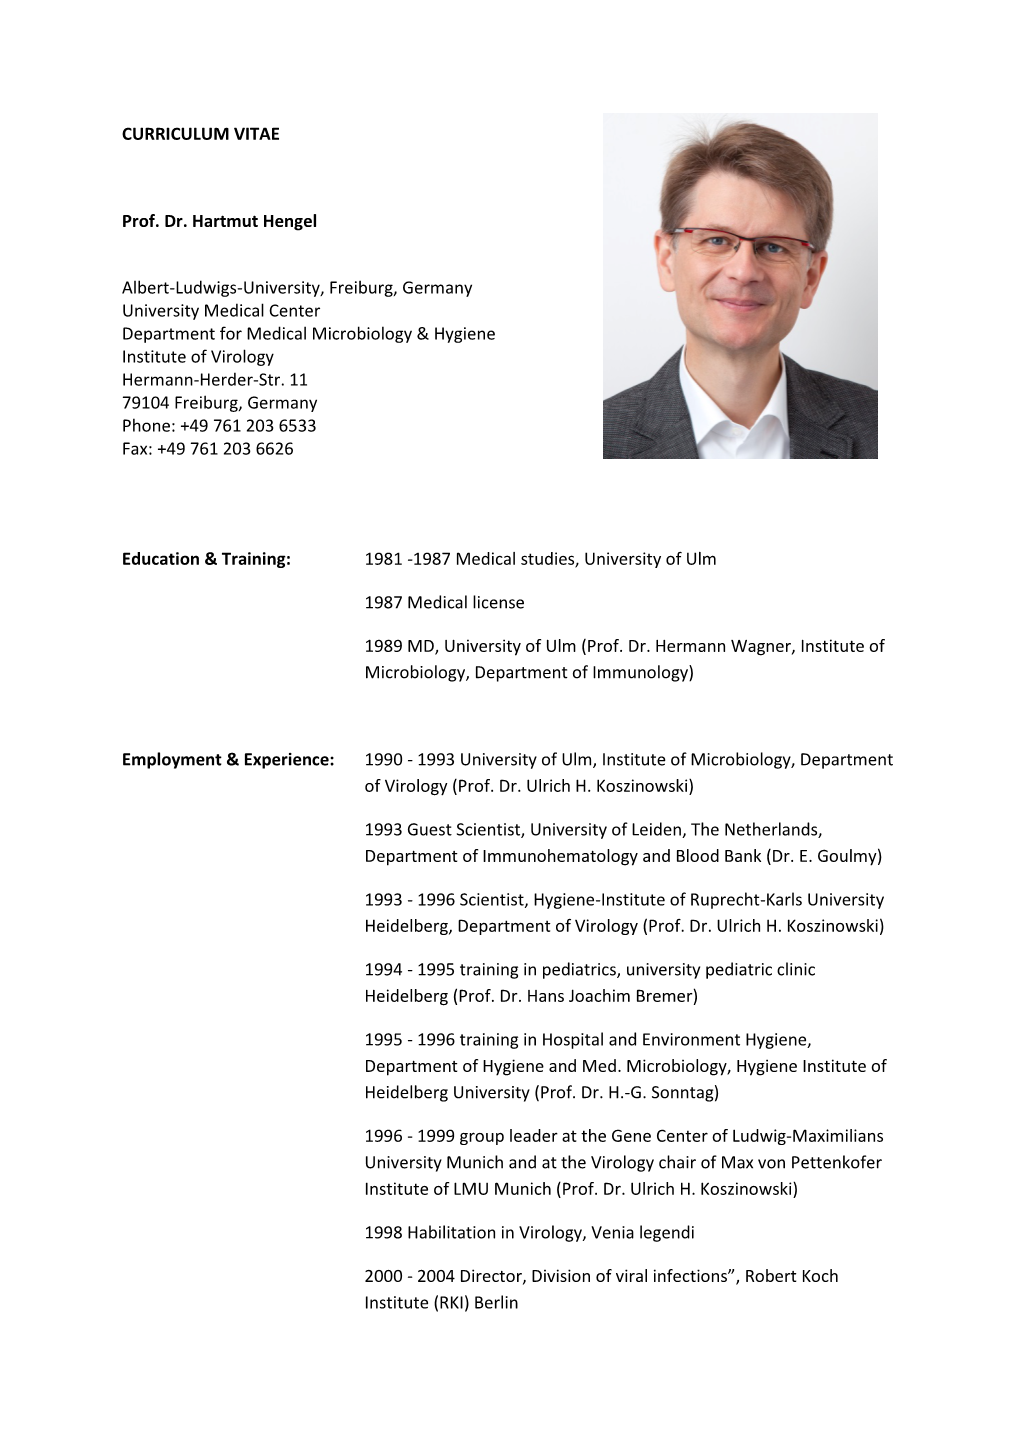 CURRICULUM VITAE Prof. Dr. Hartmut Hengel Albert-Ludwigs